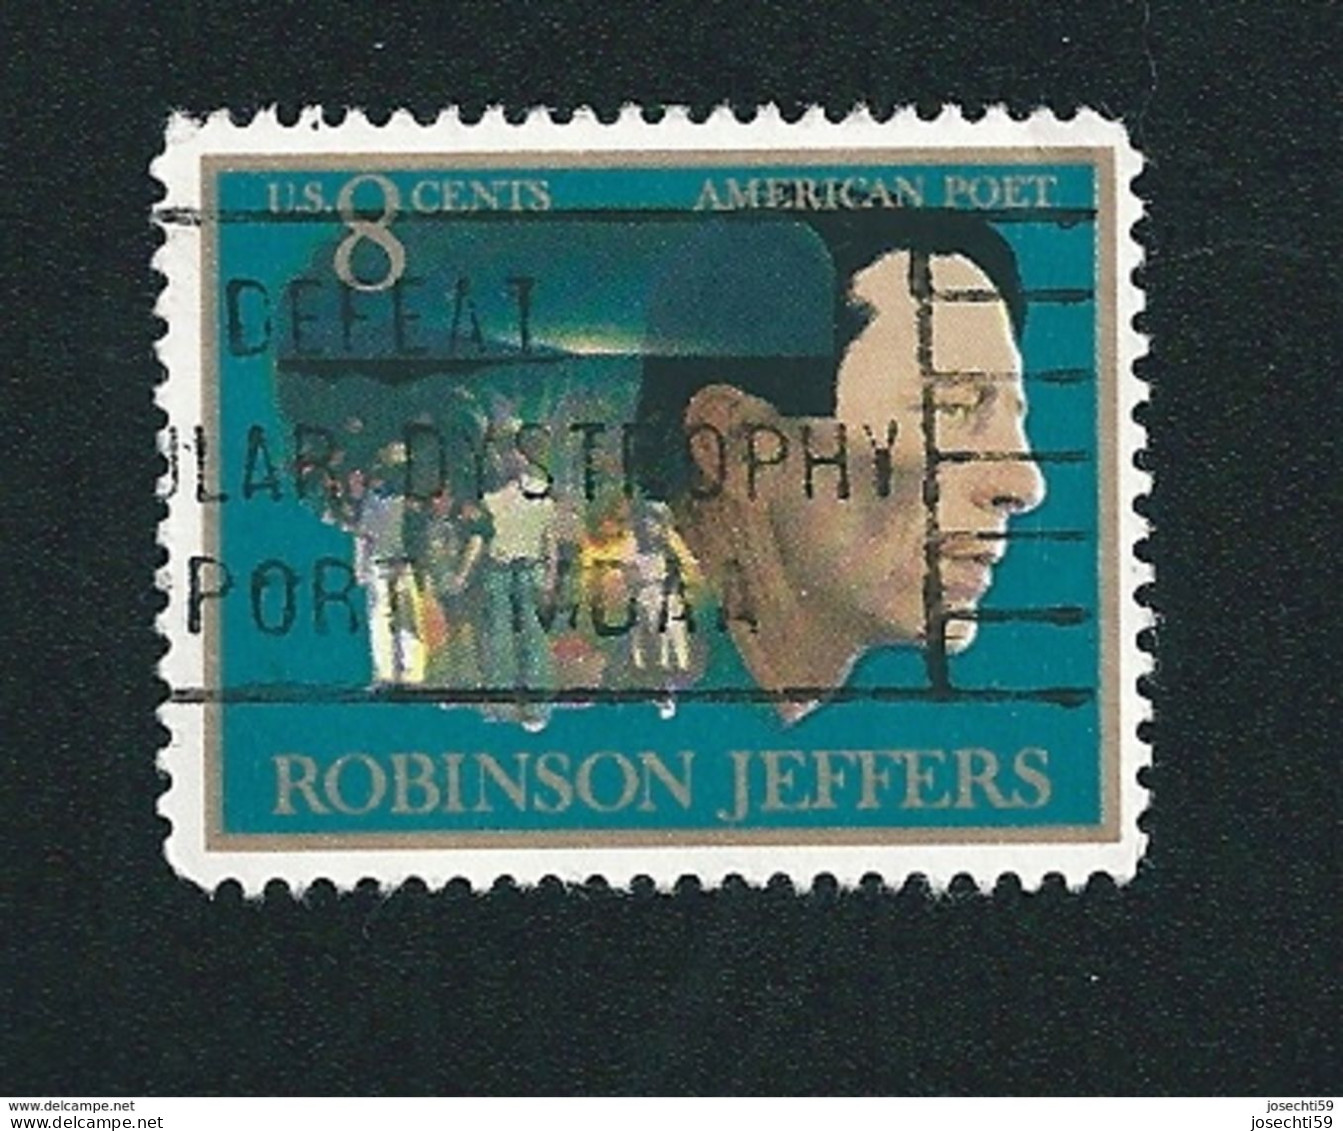 N° 1002 John Robinson Jeffers (1887-1962), American Poet   Timbre Etats-Unis (1973)   Oblitéré - Used Stamps